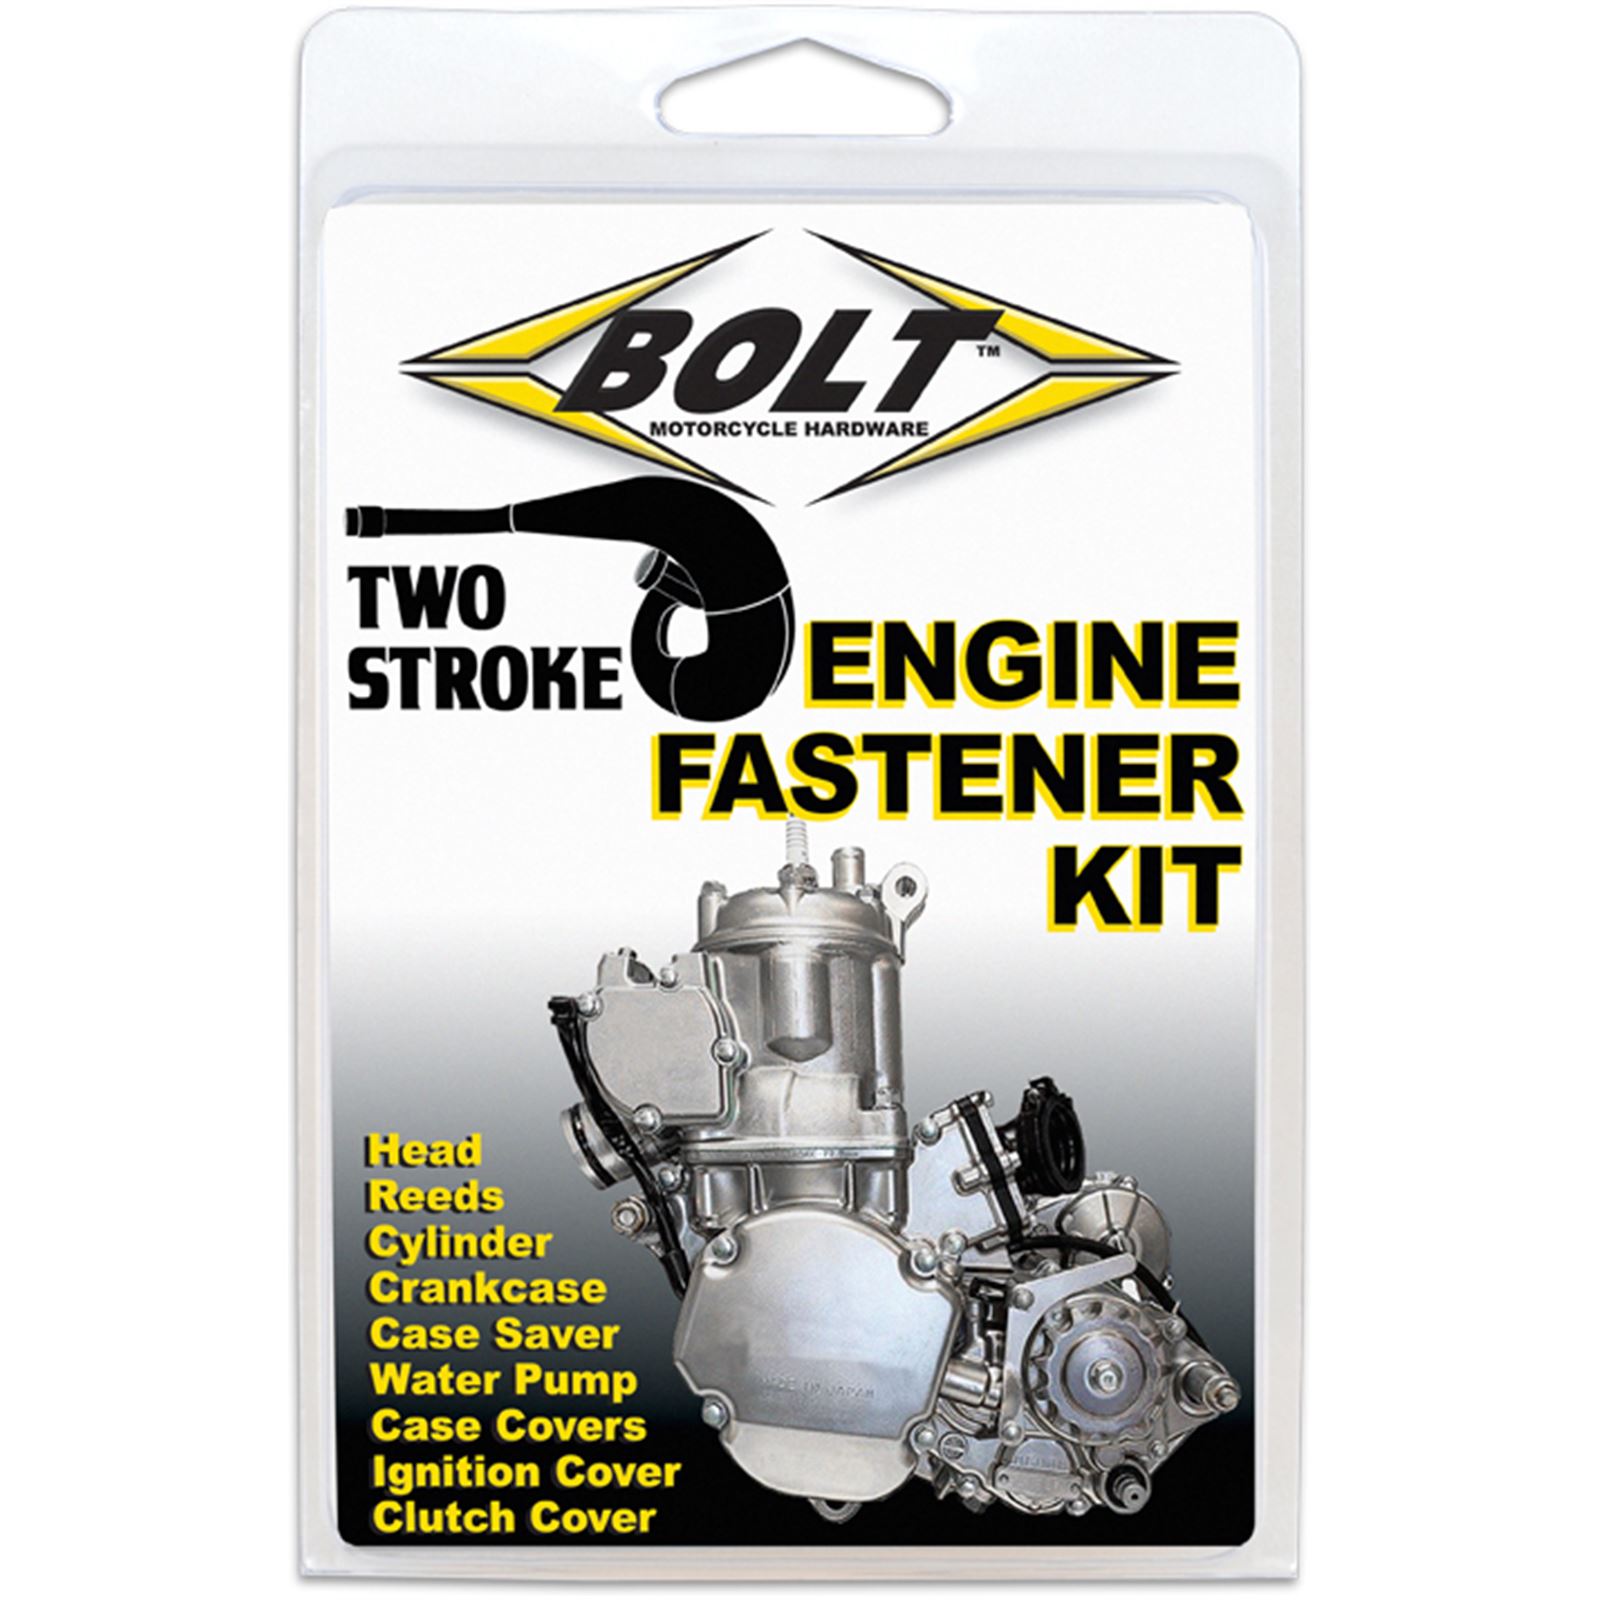 Bolt MC Hardware Engine Fastener Kits